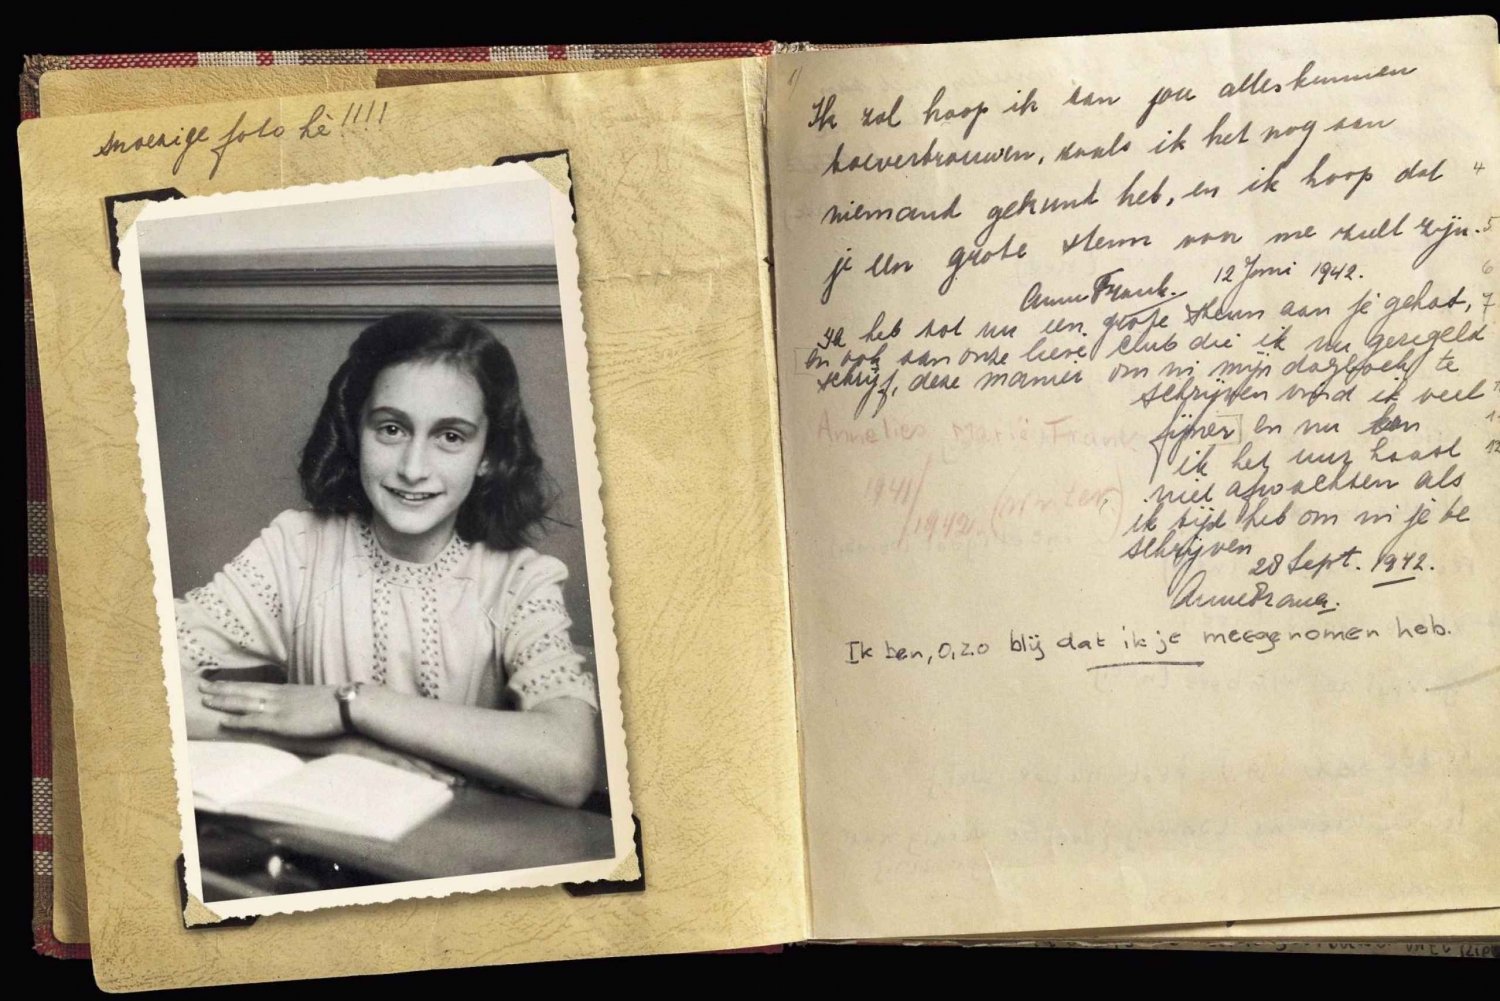 Amsterdam: Privat rundtur i Anne Franks och judiska kvarteren